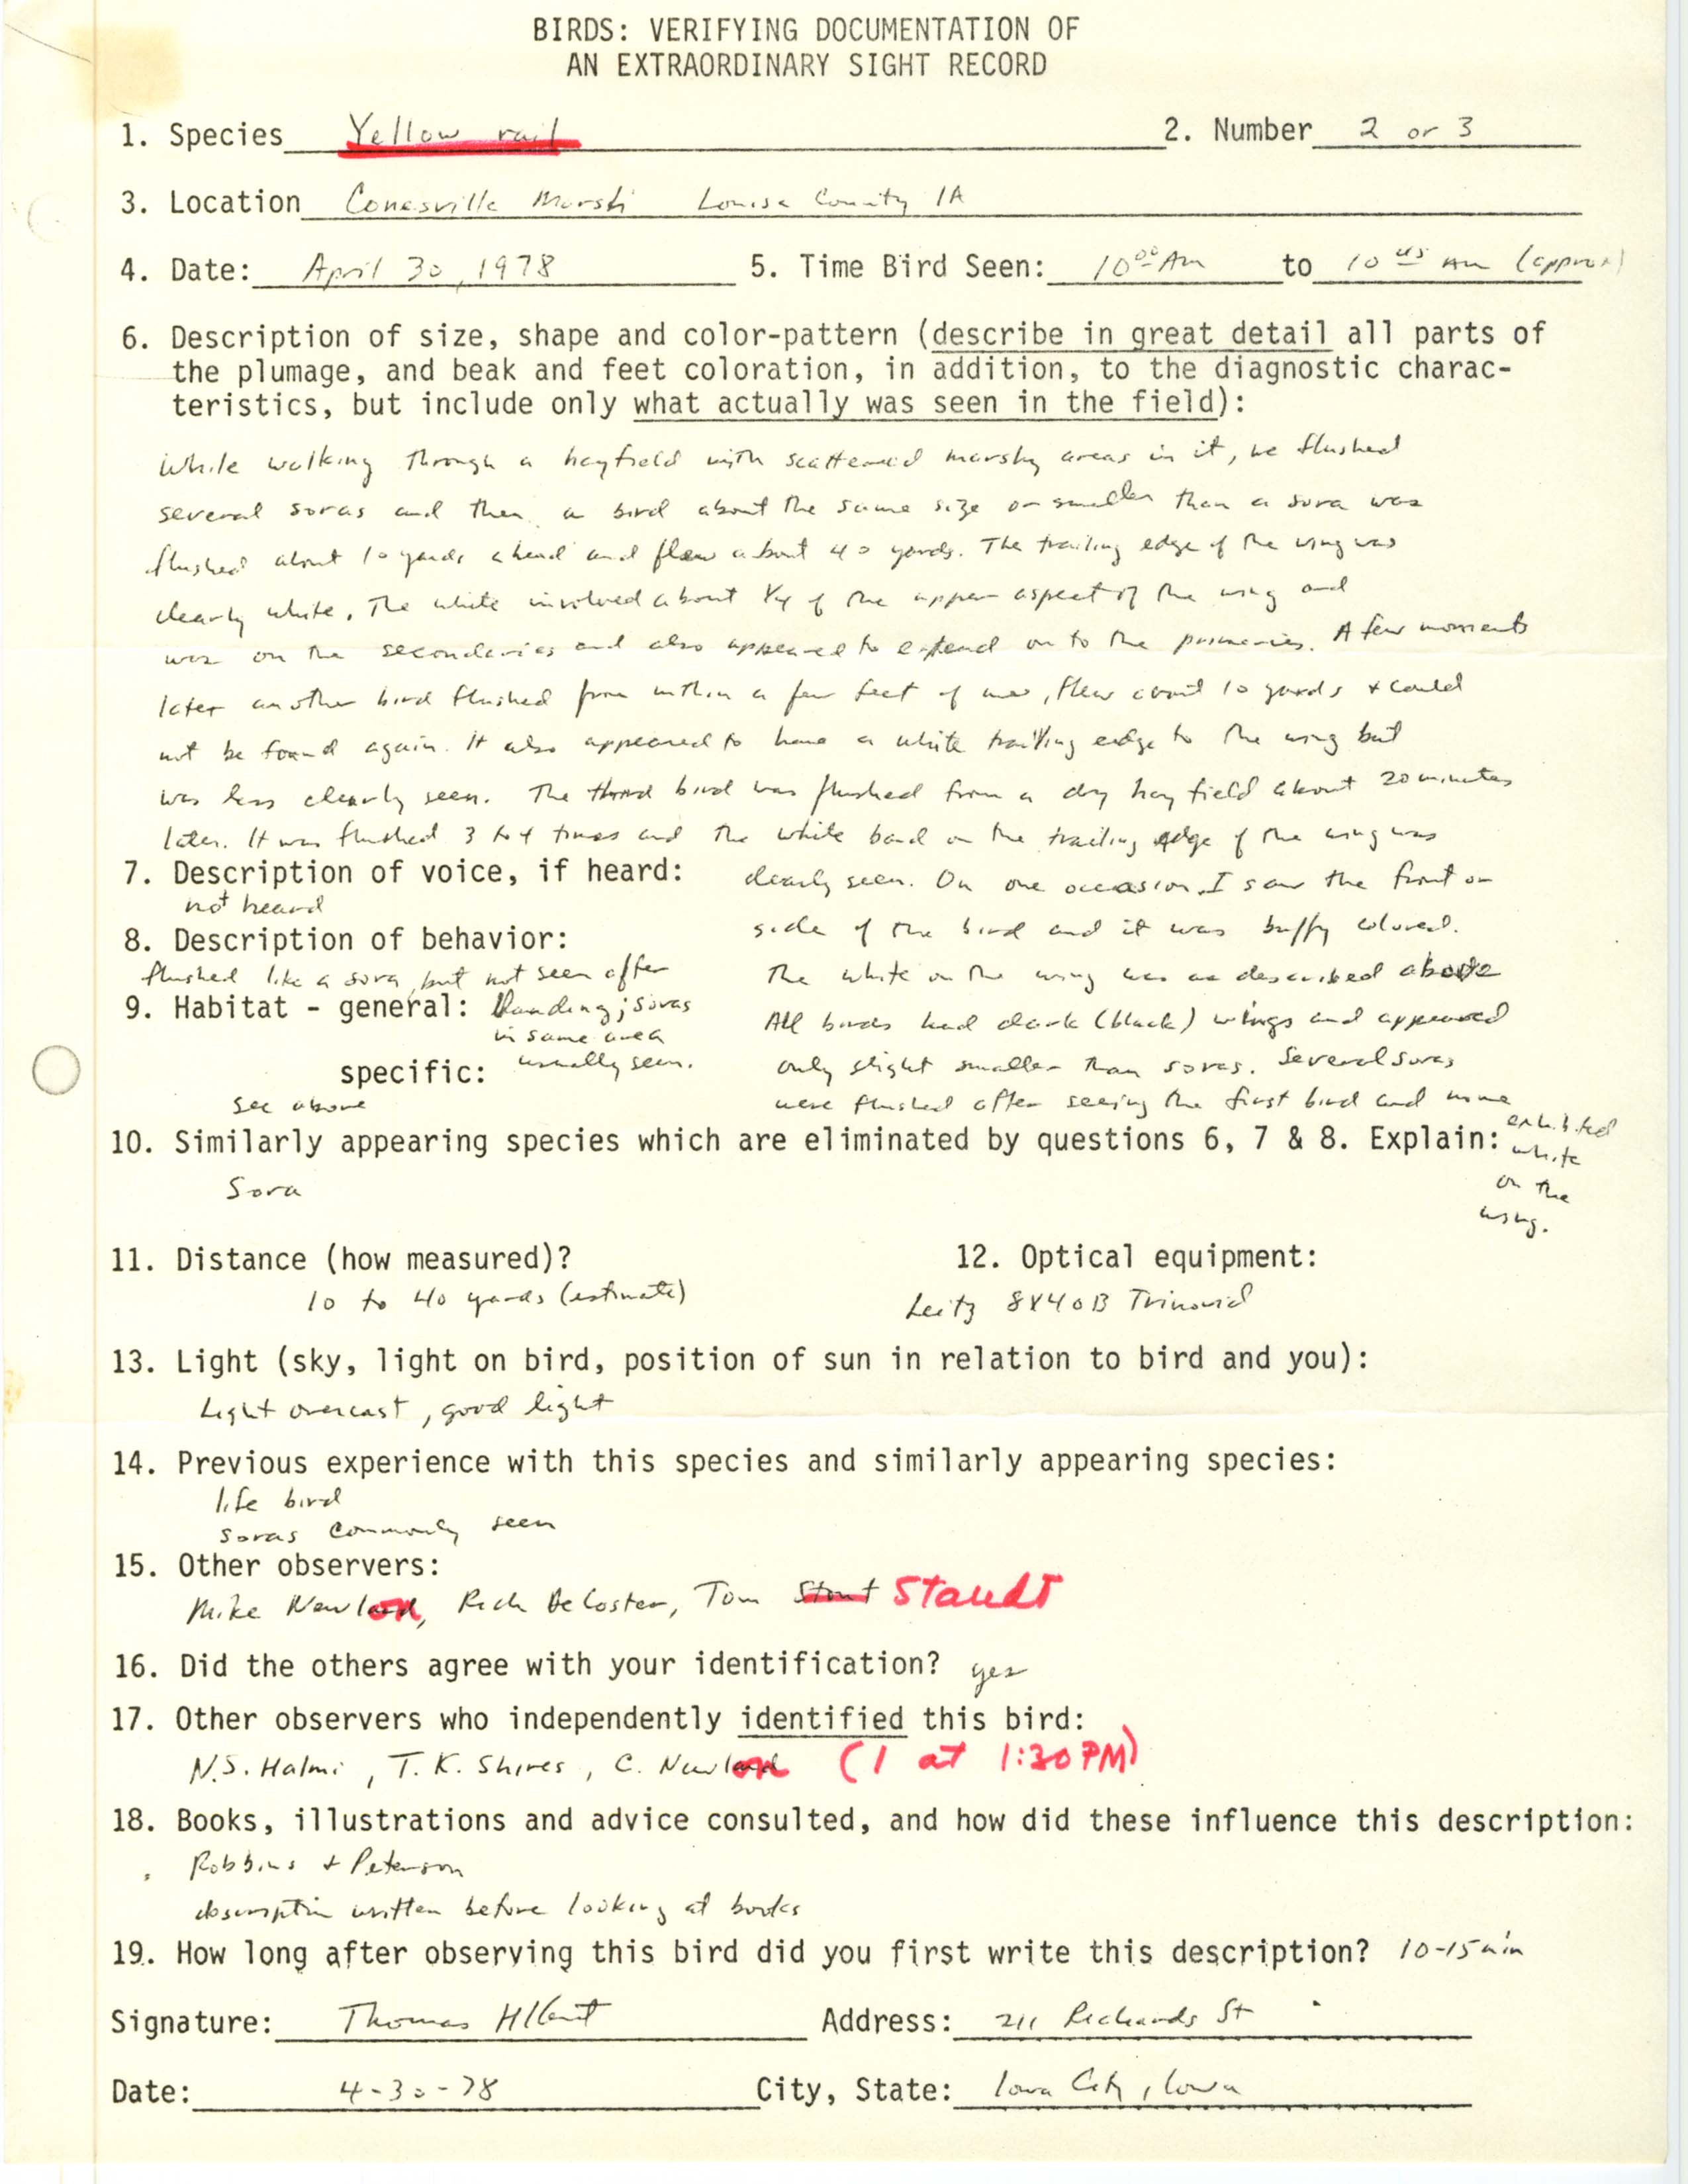 Rare bird documentation form for Yellow Rail at Conesville Marsh, 1978